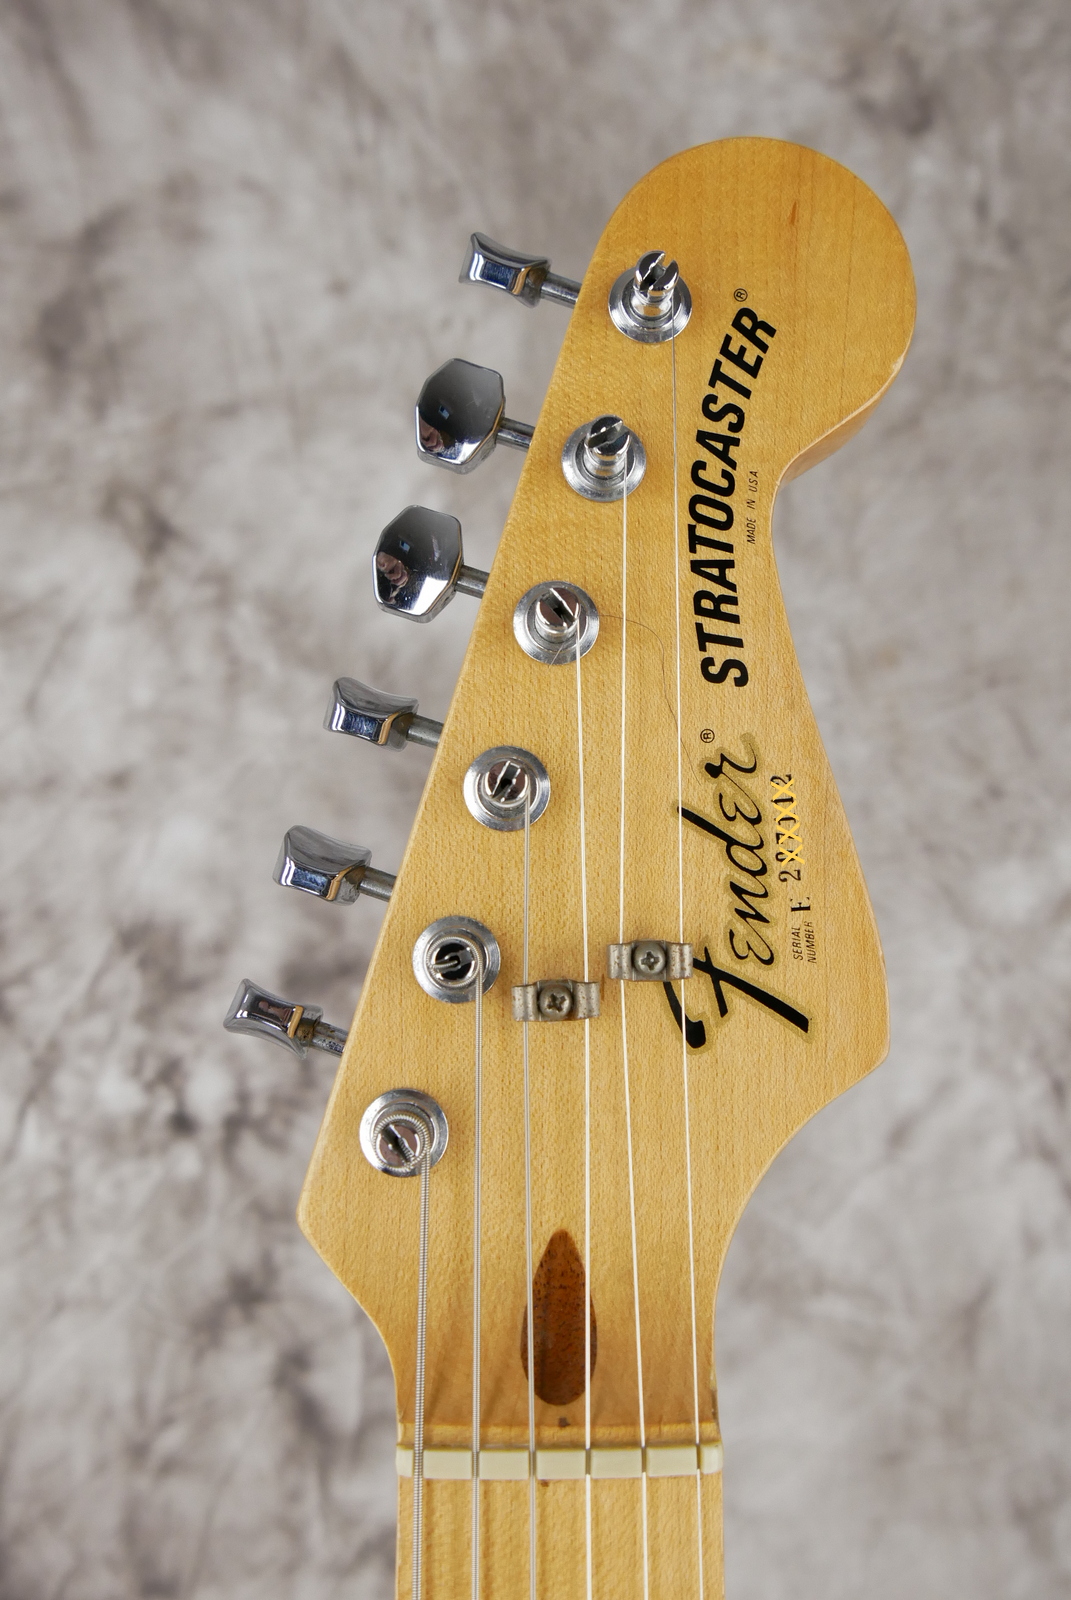 Fender_Stratocaster_Dan_smith_1982_tremolo_hardcase-009.JPG